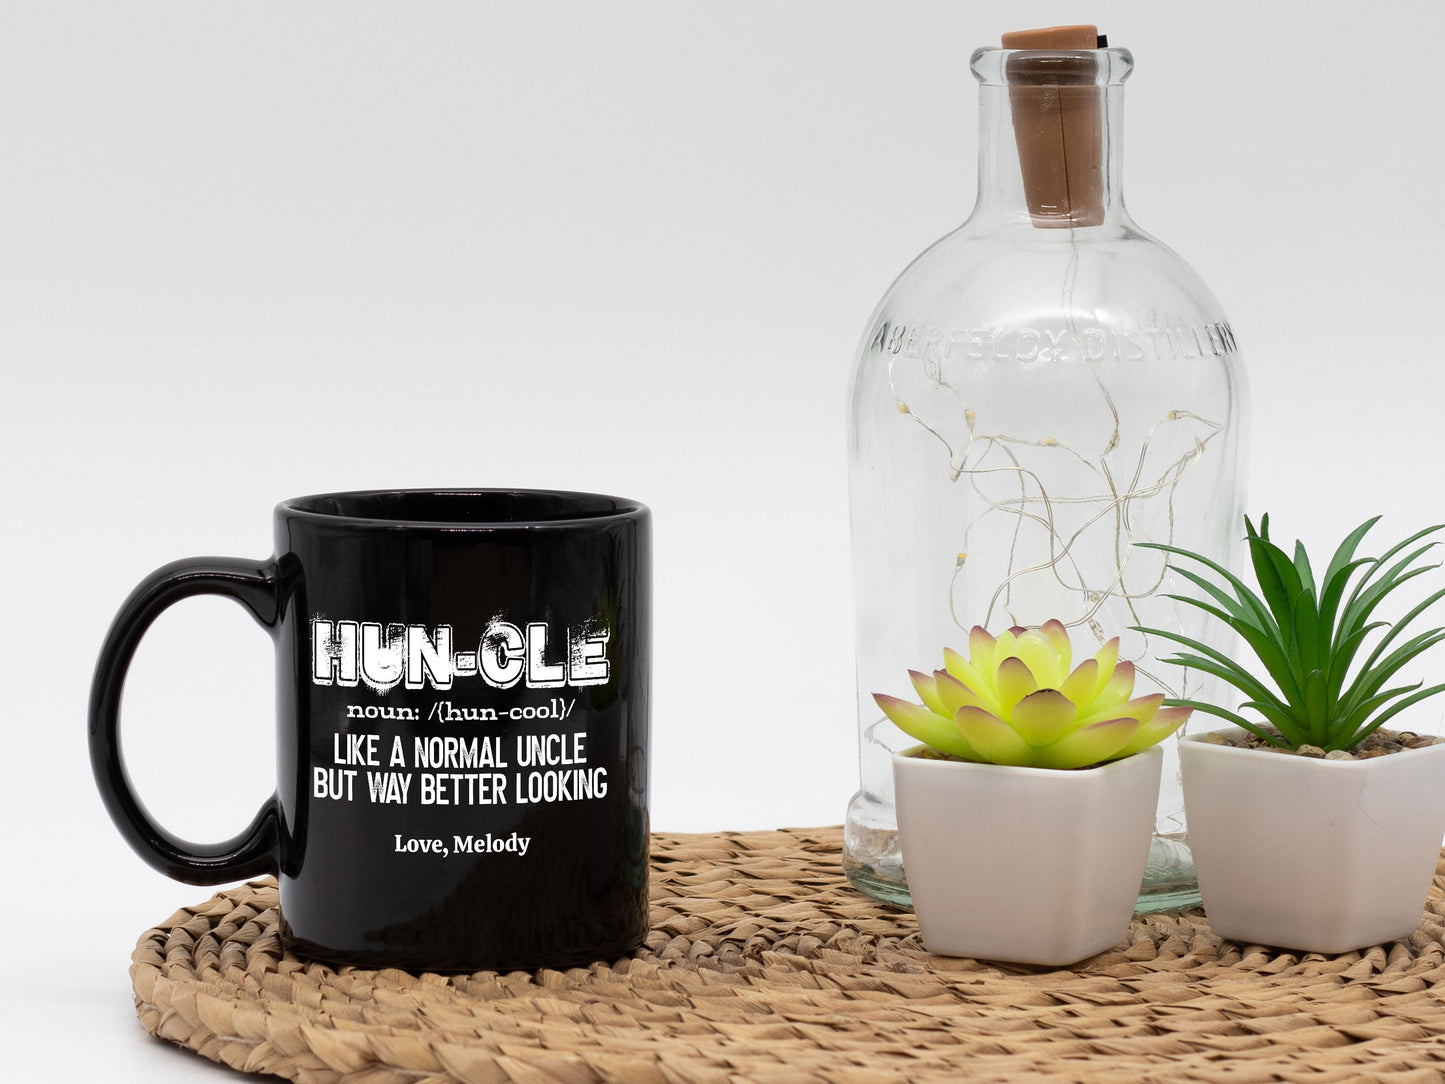 Huncle Black Coffee Mug - Mug Project | Funny Coffee Mugs, Unique Wine Tumblers & Gifts